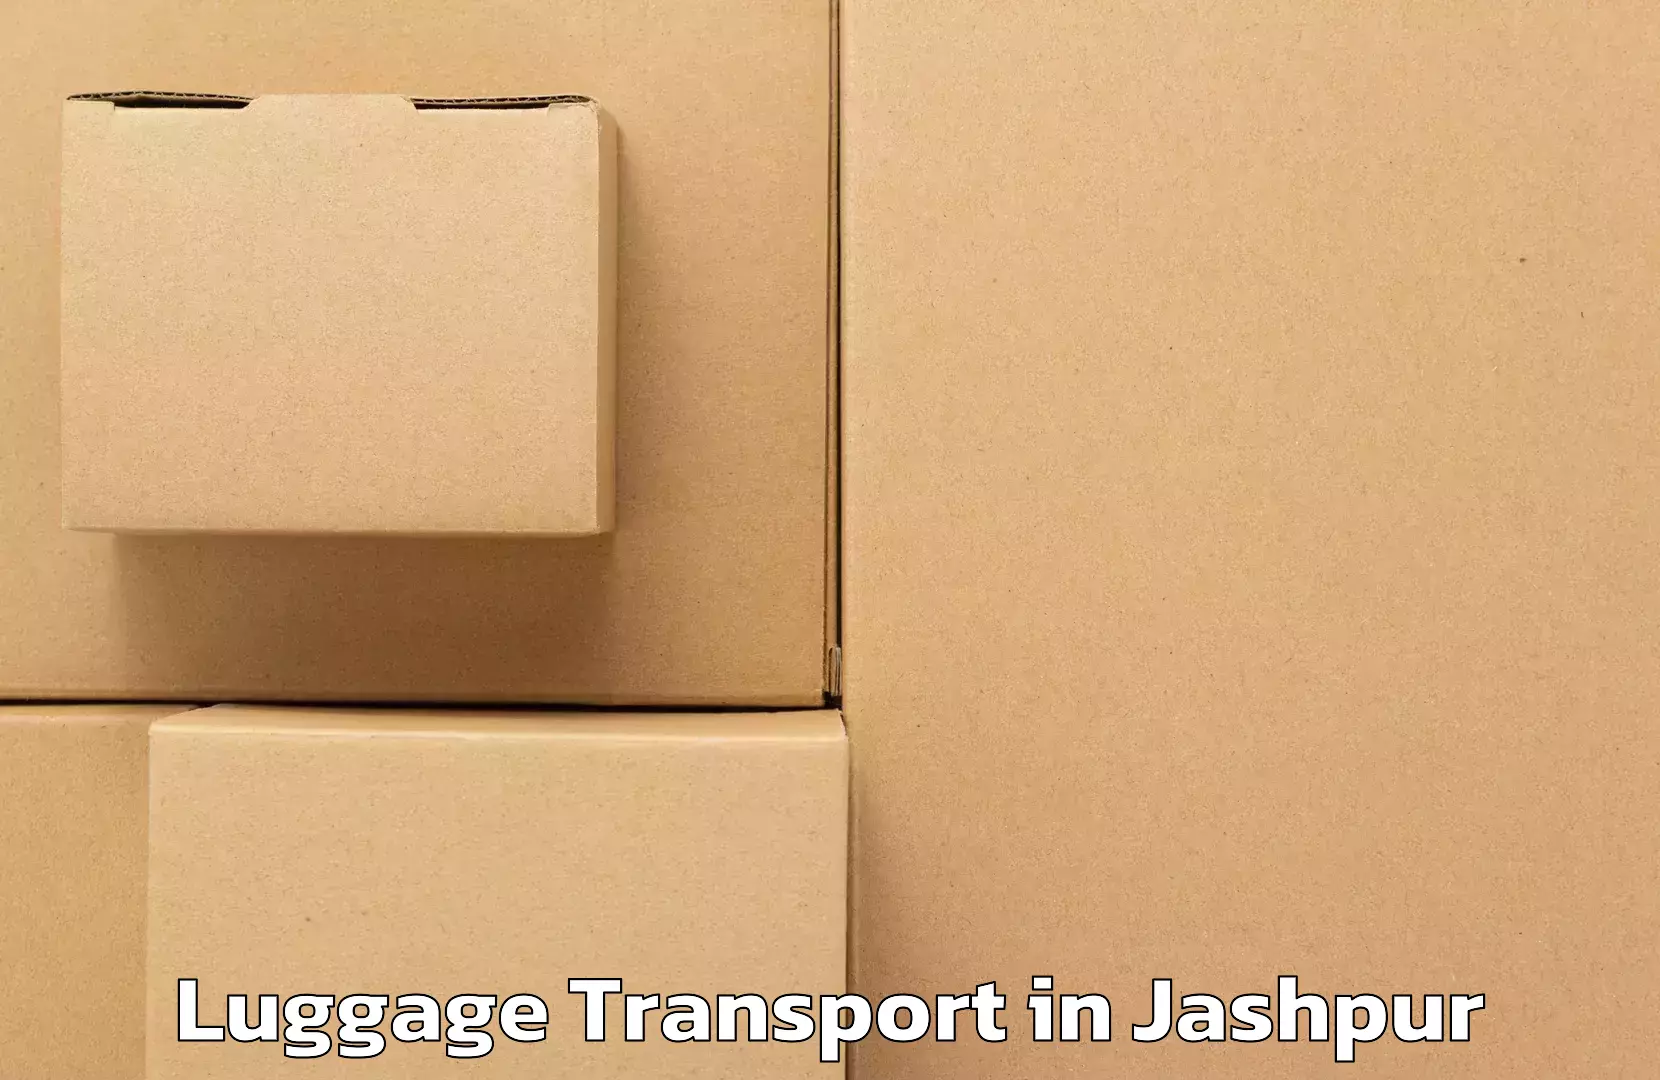 Luggage delivery optimization in Jashpur